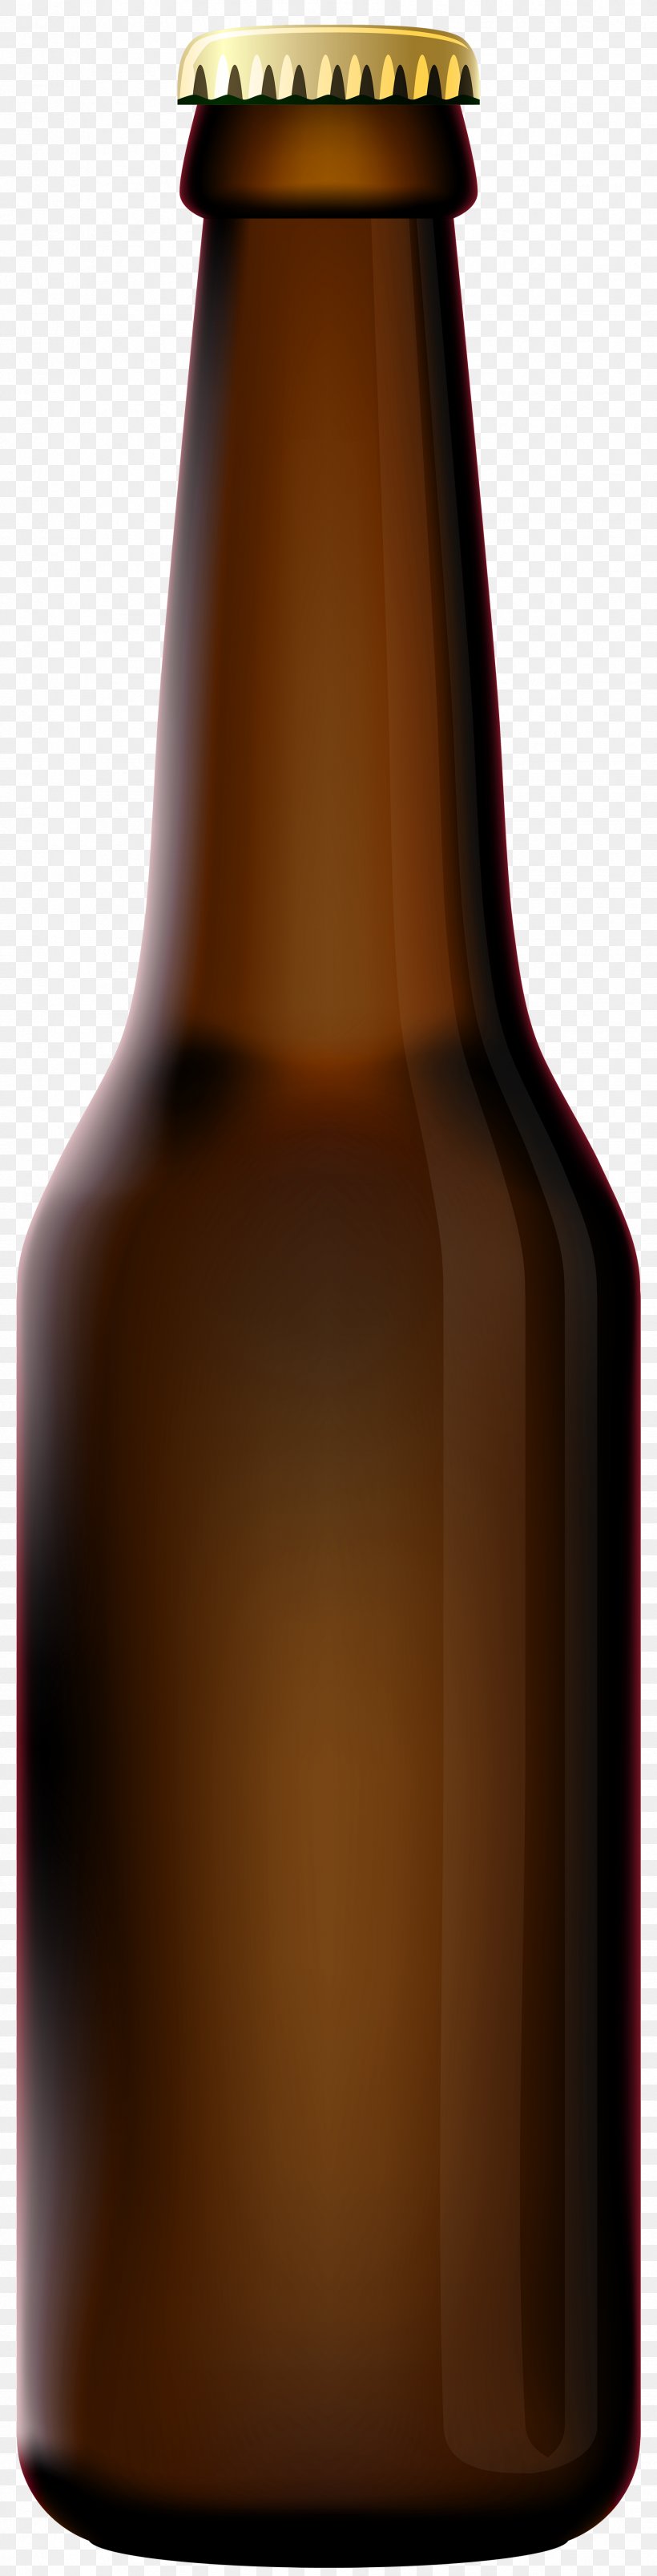 Beer Bottle Glass Bottle, PNG, 1786x7000px, Beer, Alcoholic Drink, Artisau Garagardotegi, Beer Bottle, Beer Brewing Grains Malts Download Free